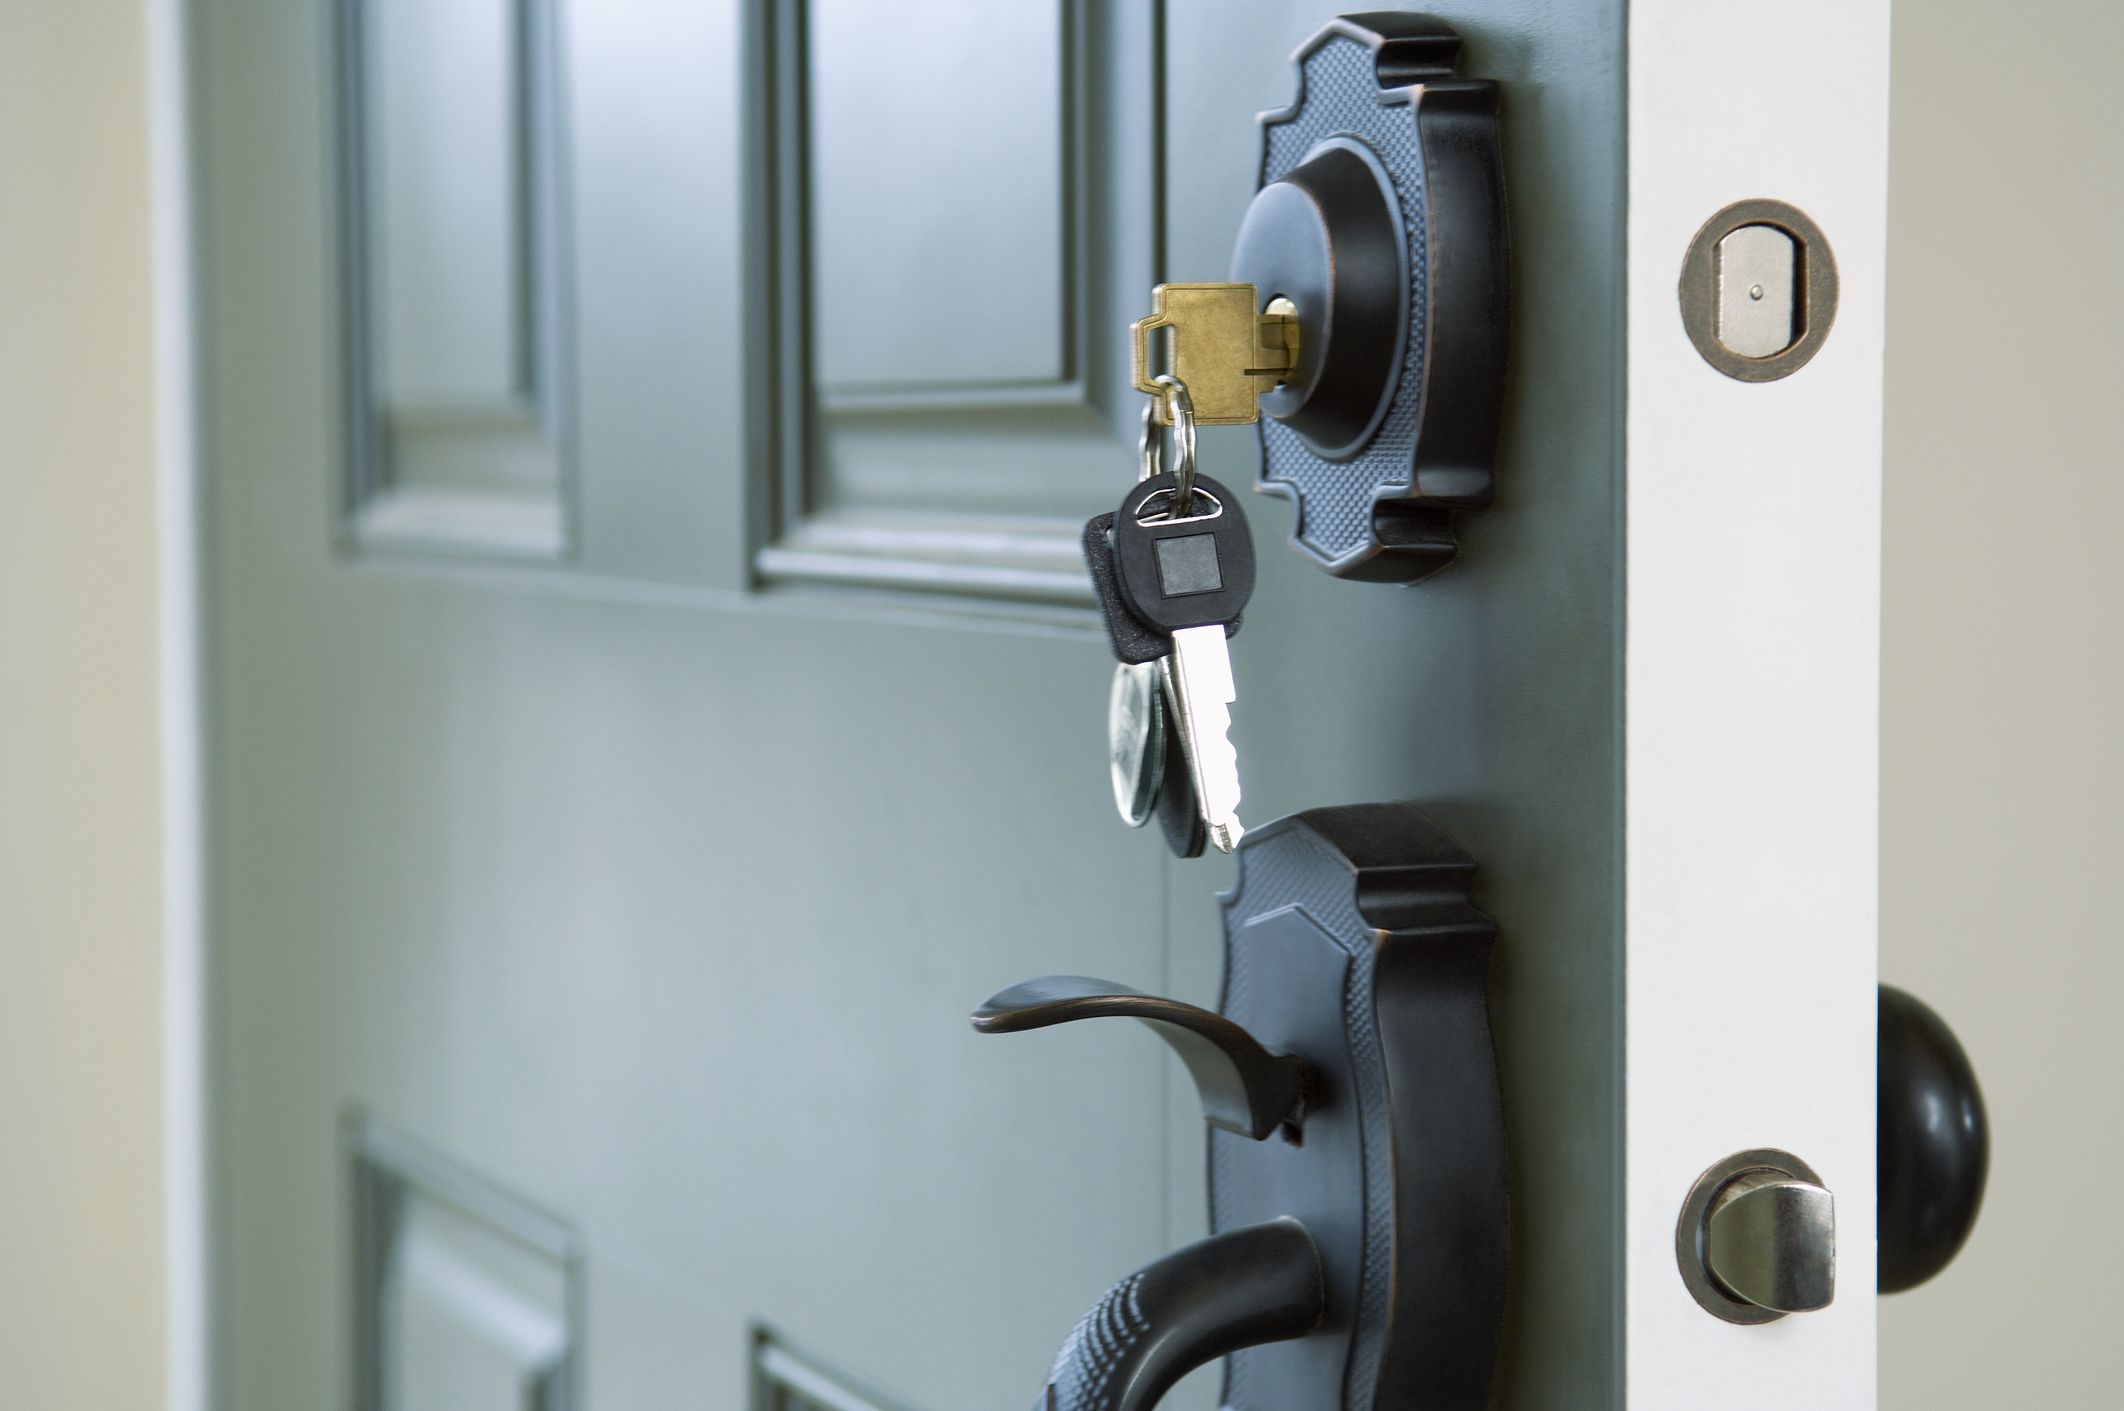 Are locks on bedroom doors illegal in the UK?